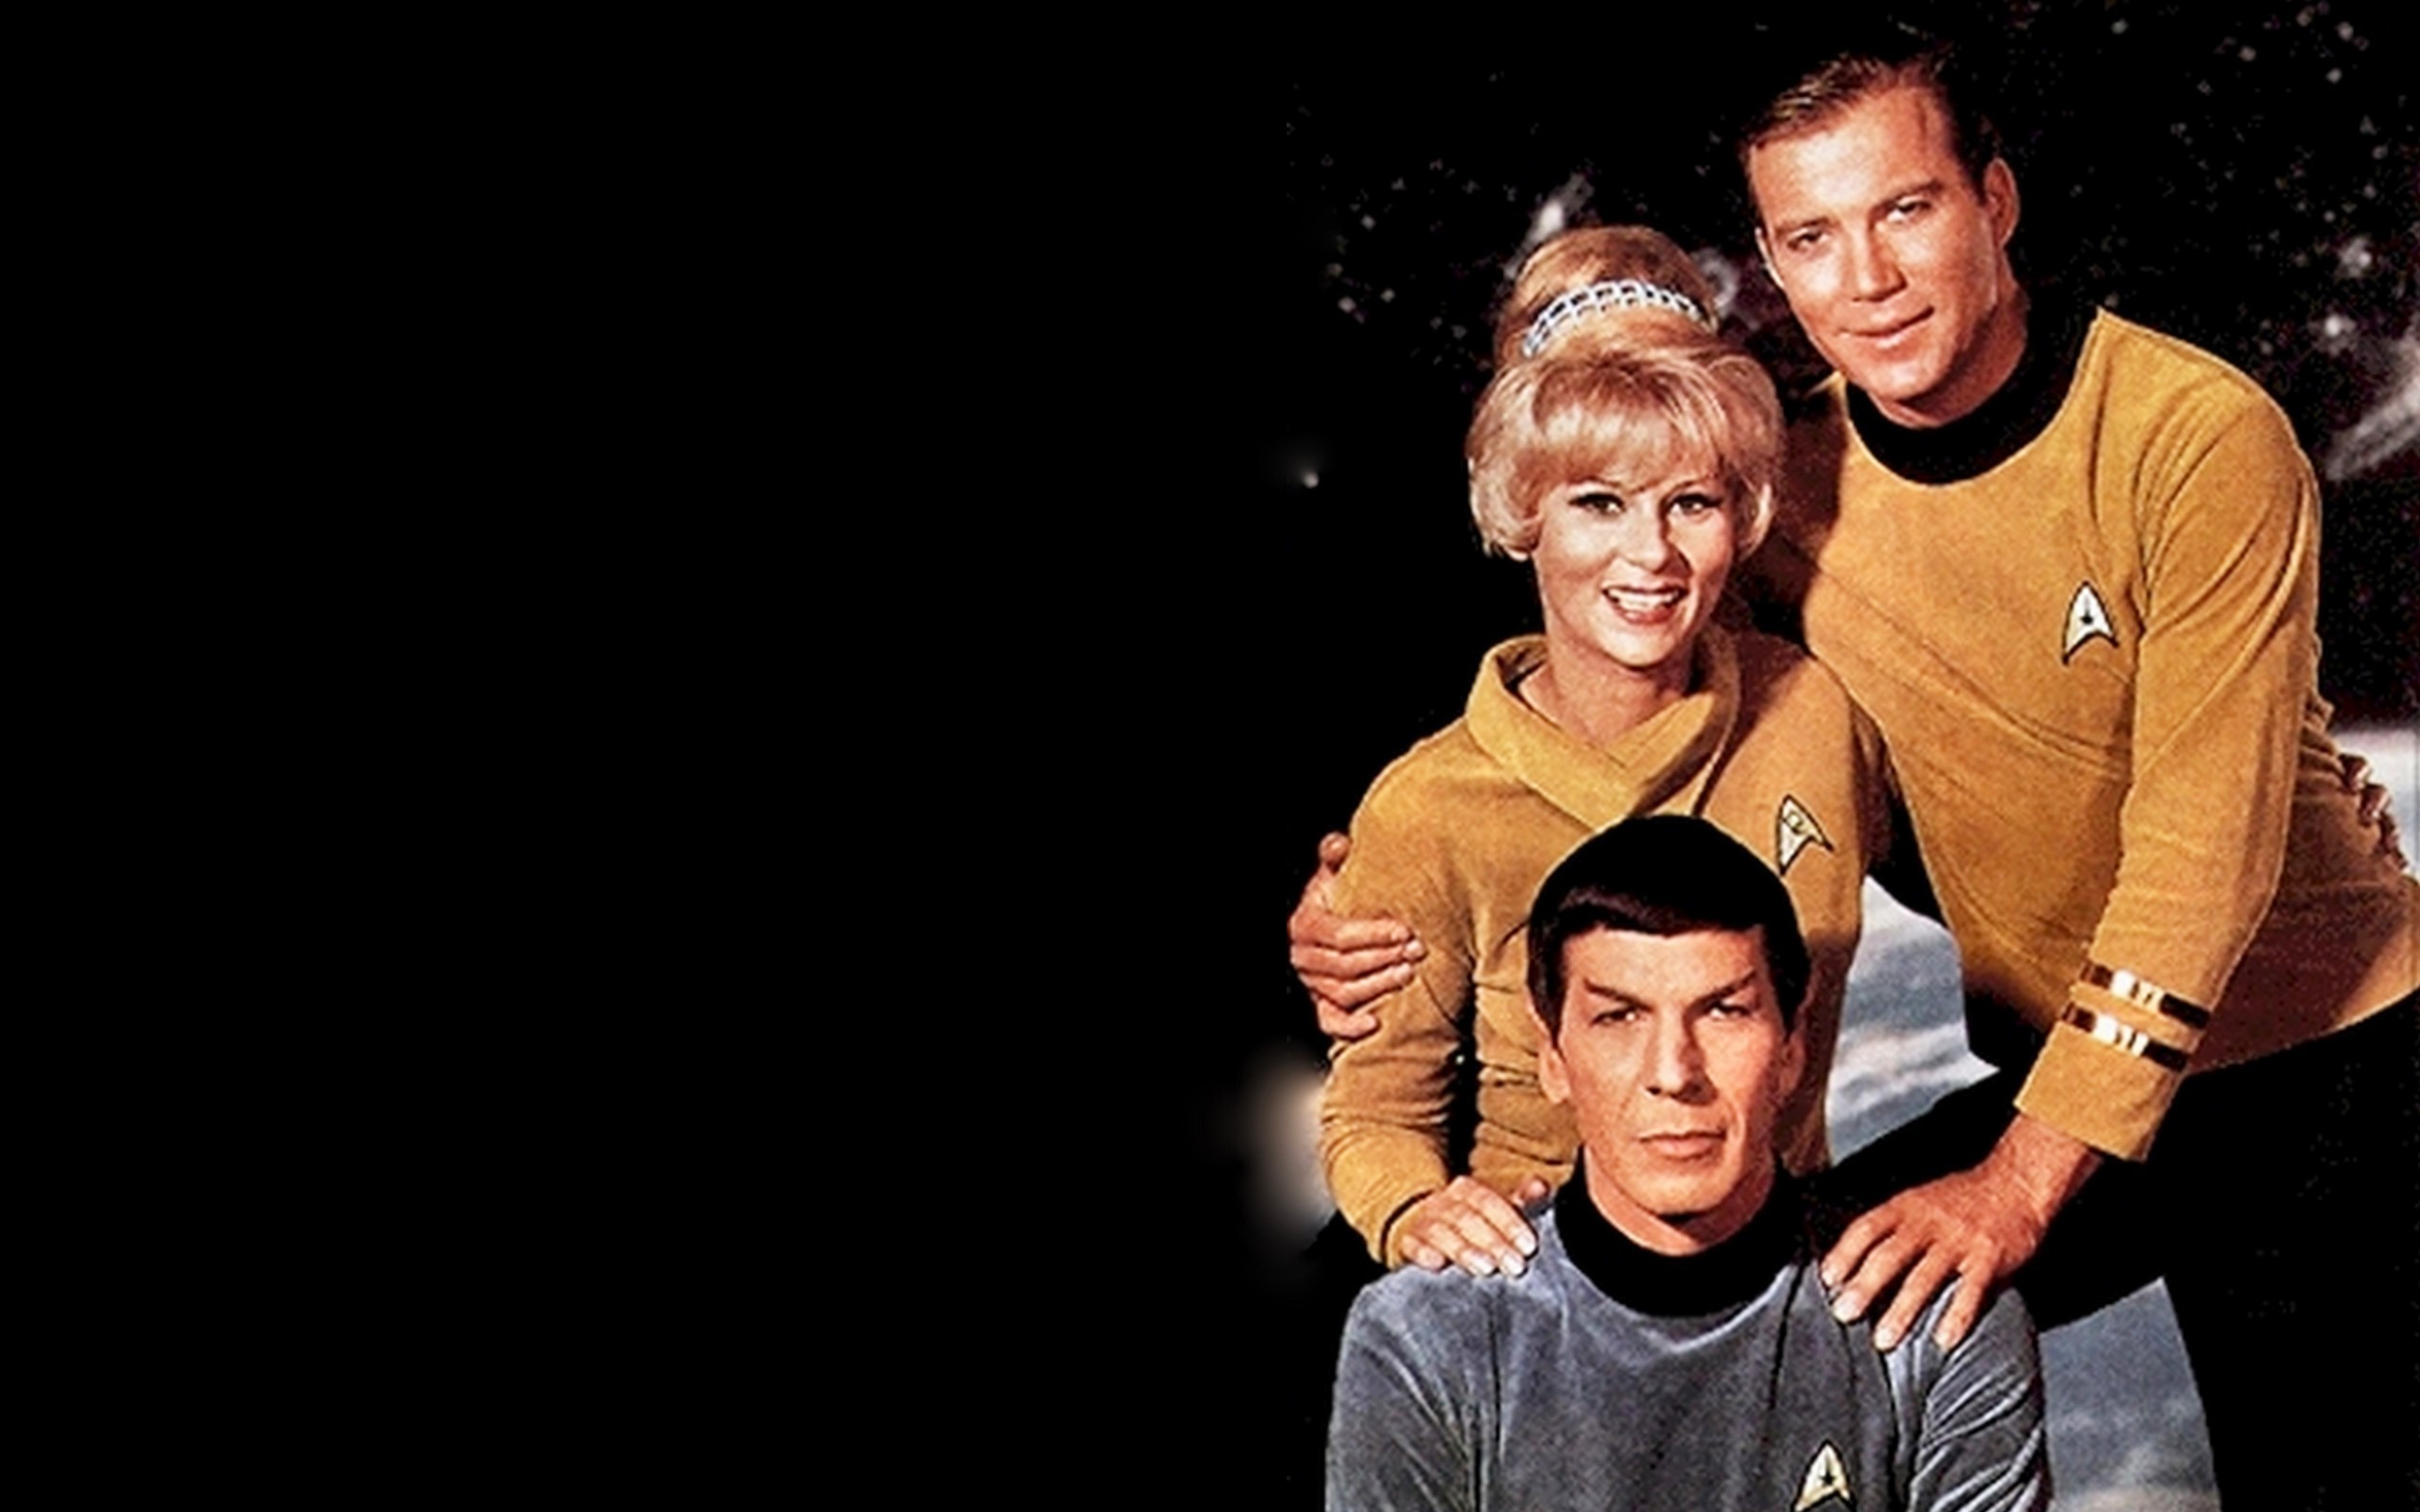 2560x1600 Star Trek: The Original Series